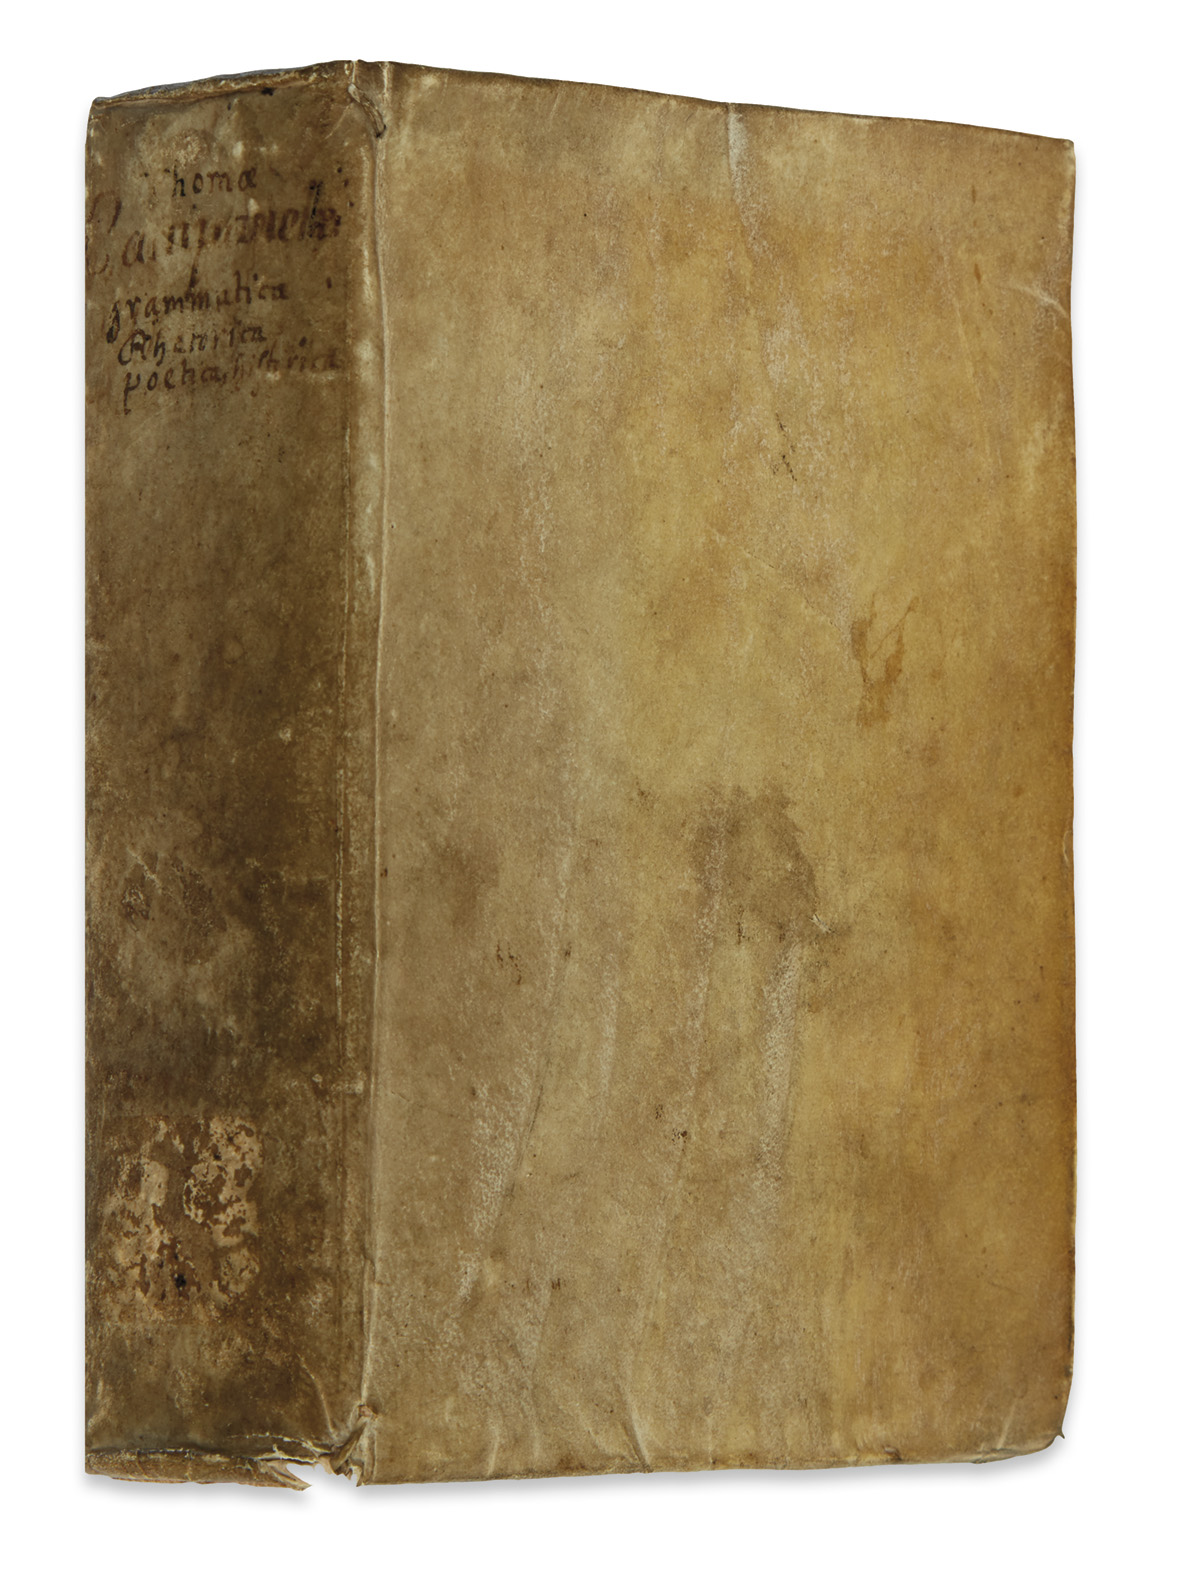 CAMPANELLA, TOMMASO. Philosophiæ rationalis partes quinque.  1638